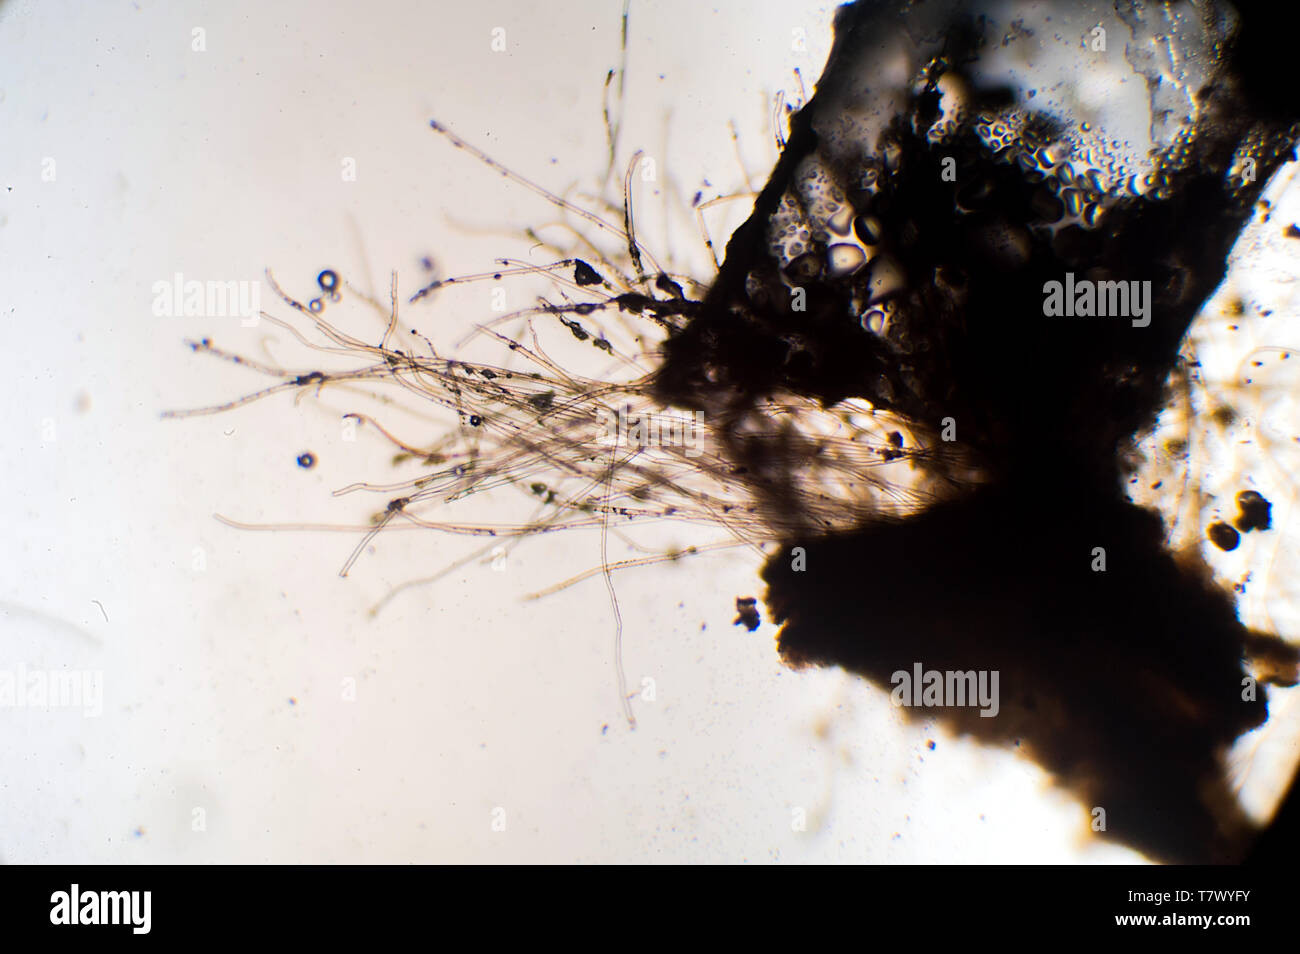 microscopic view of aspergillus mold hyphae Stock Photo